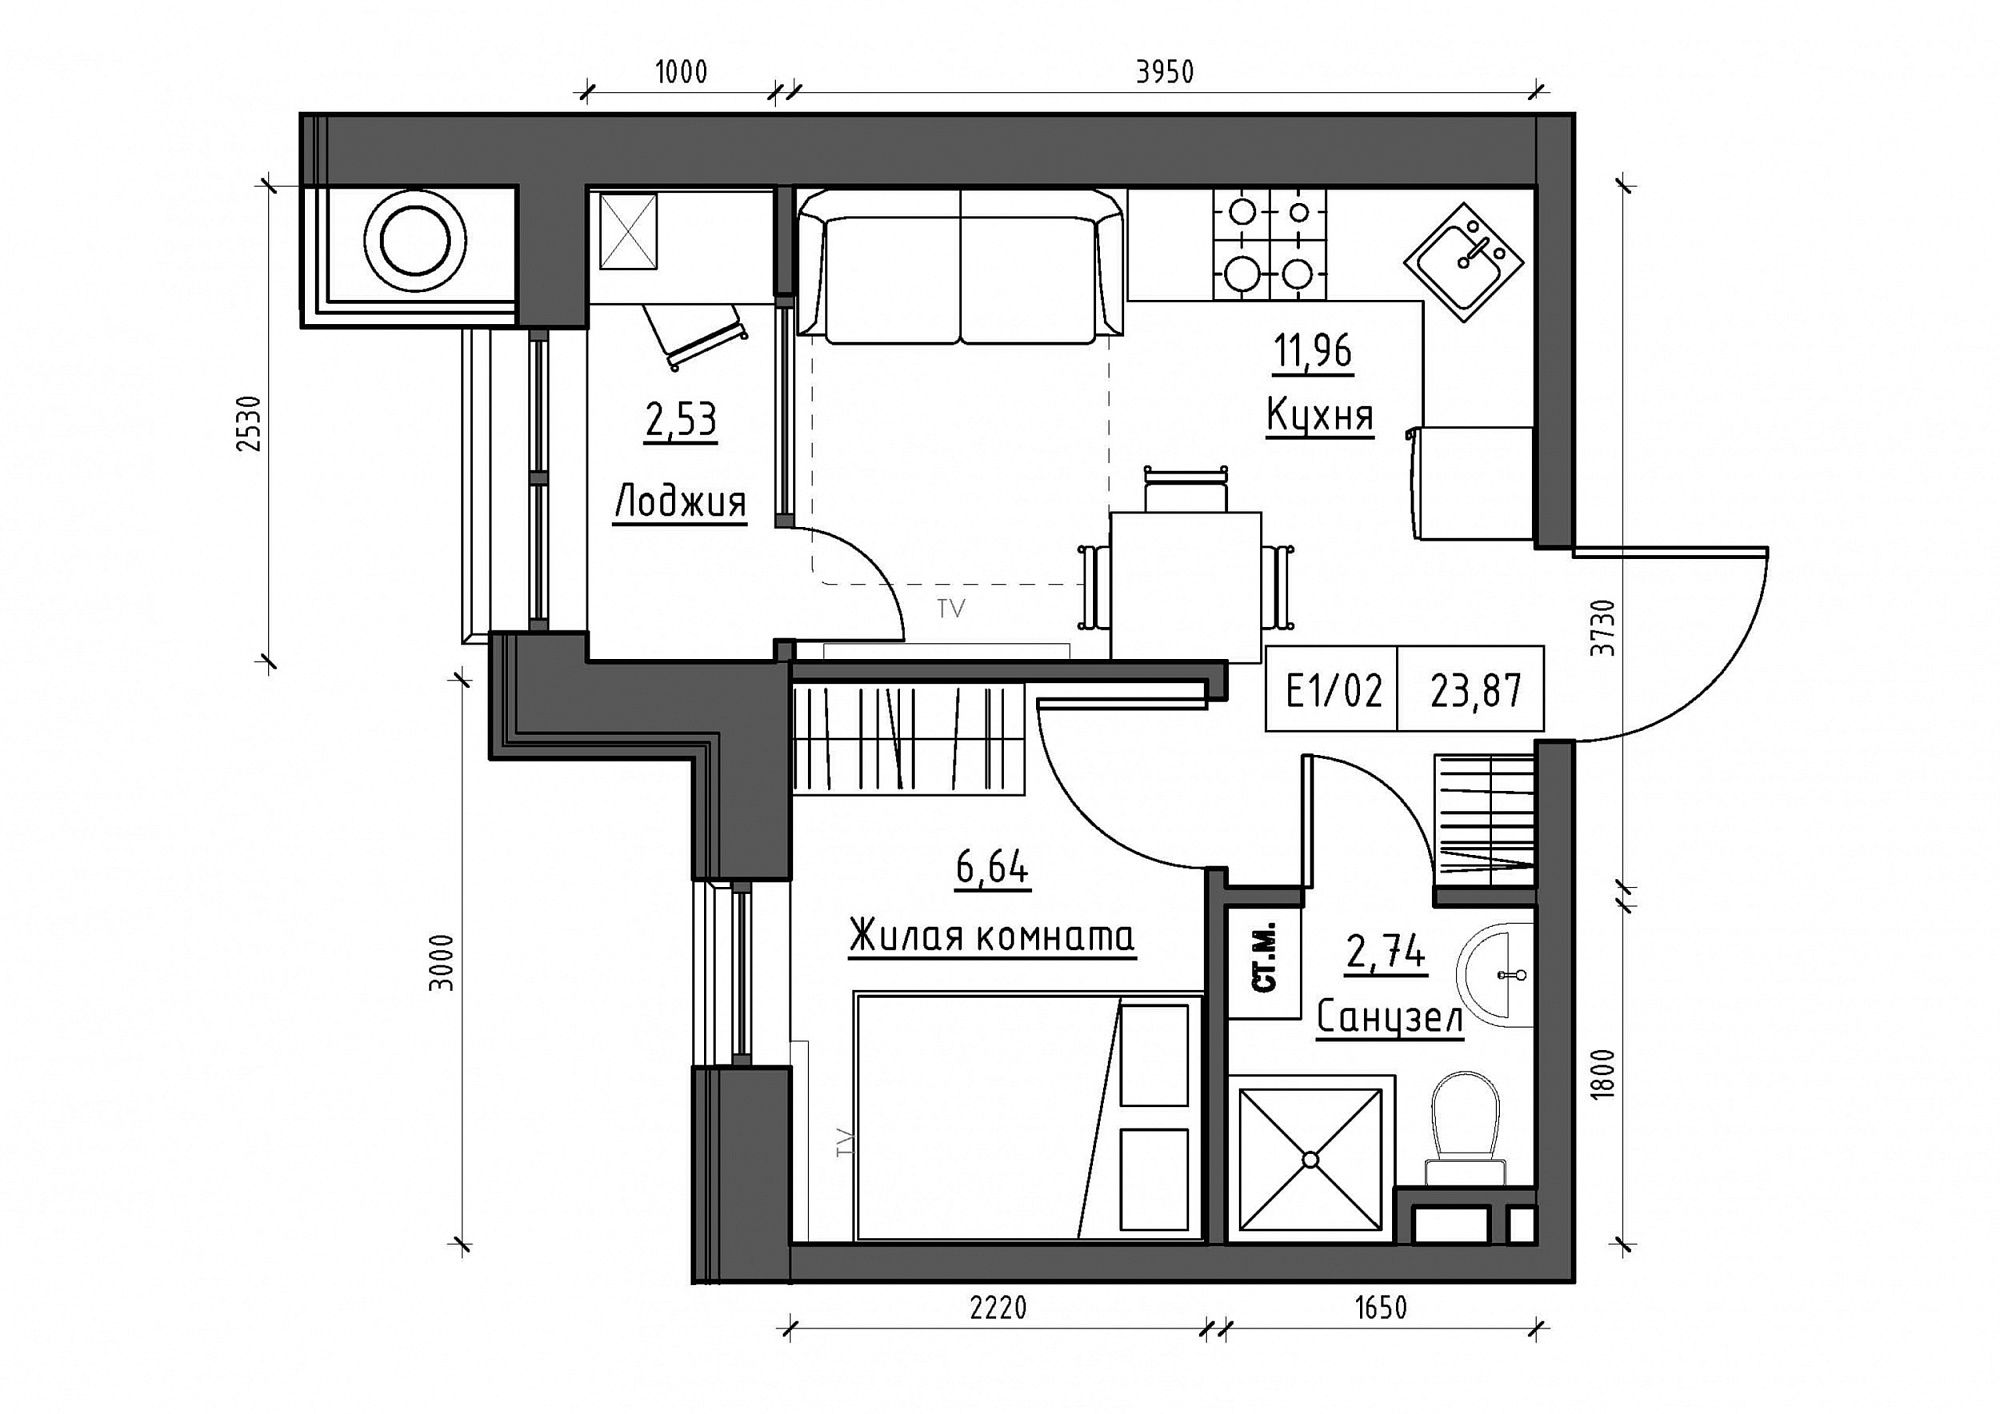 Planning 1-rm flats area 23.87m2, KS-011-02/0001.